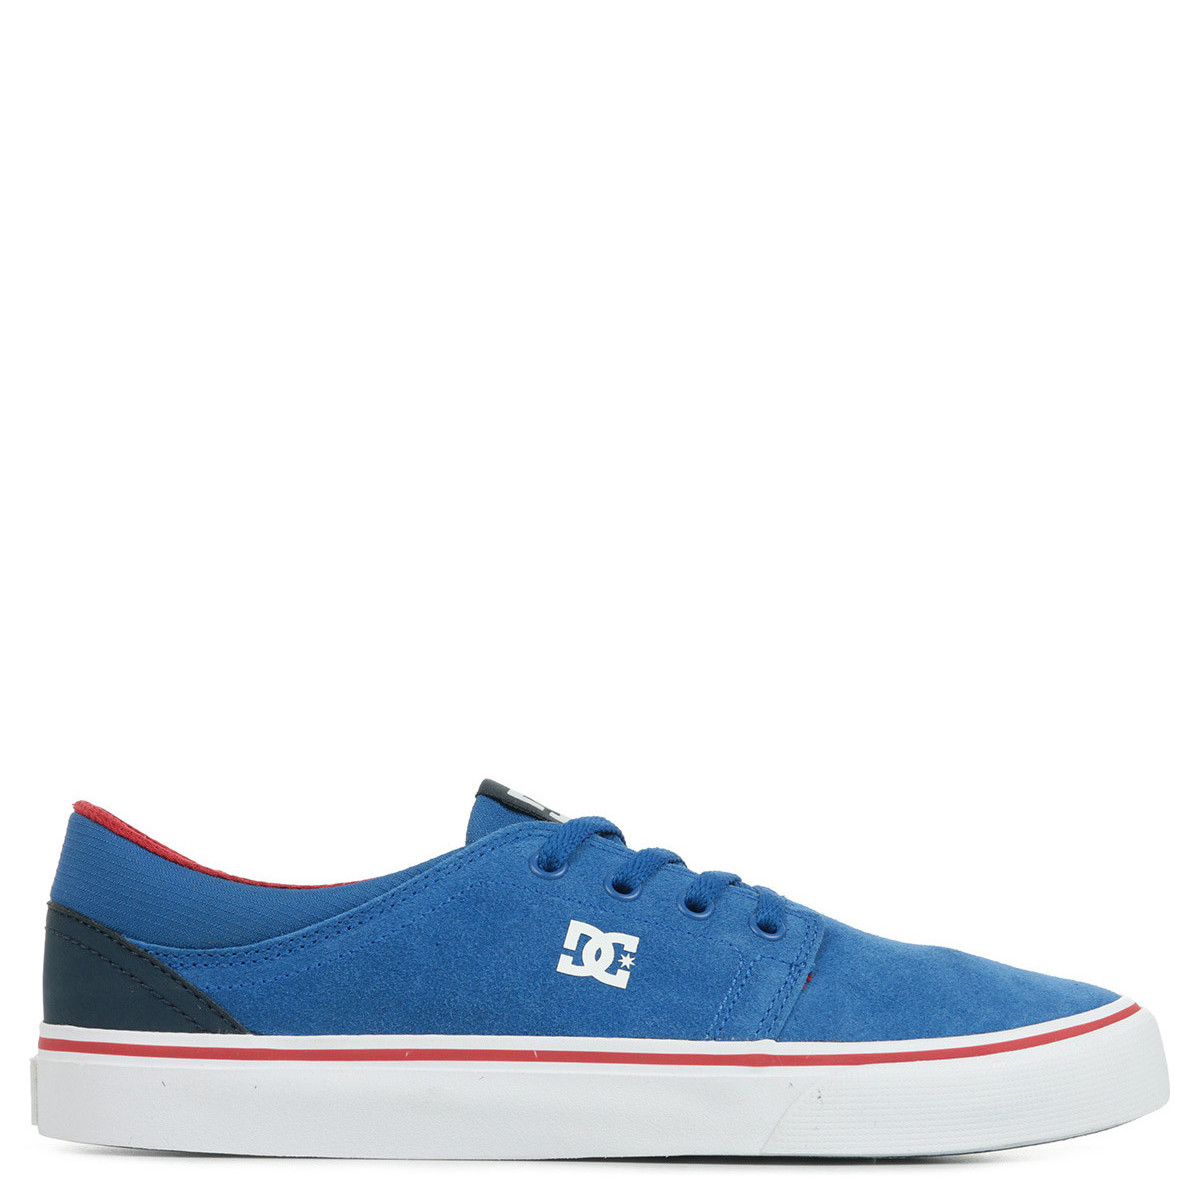 Sapatos Sapatilhas DC Shoes Trase SD Azul